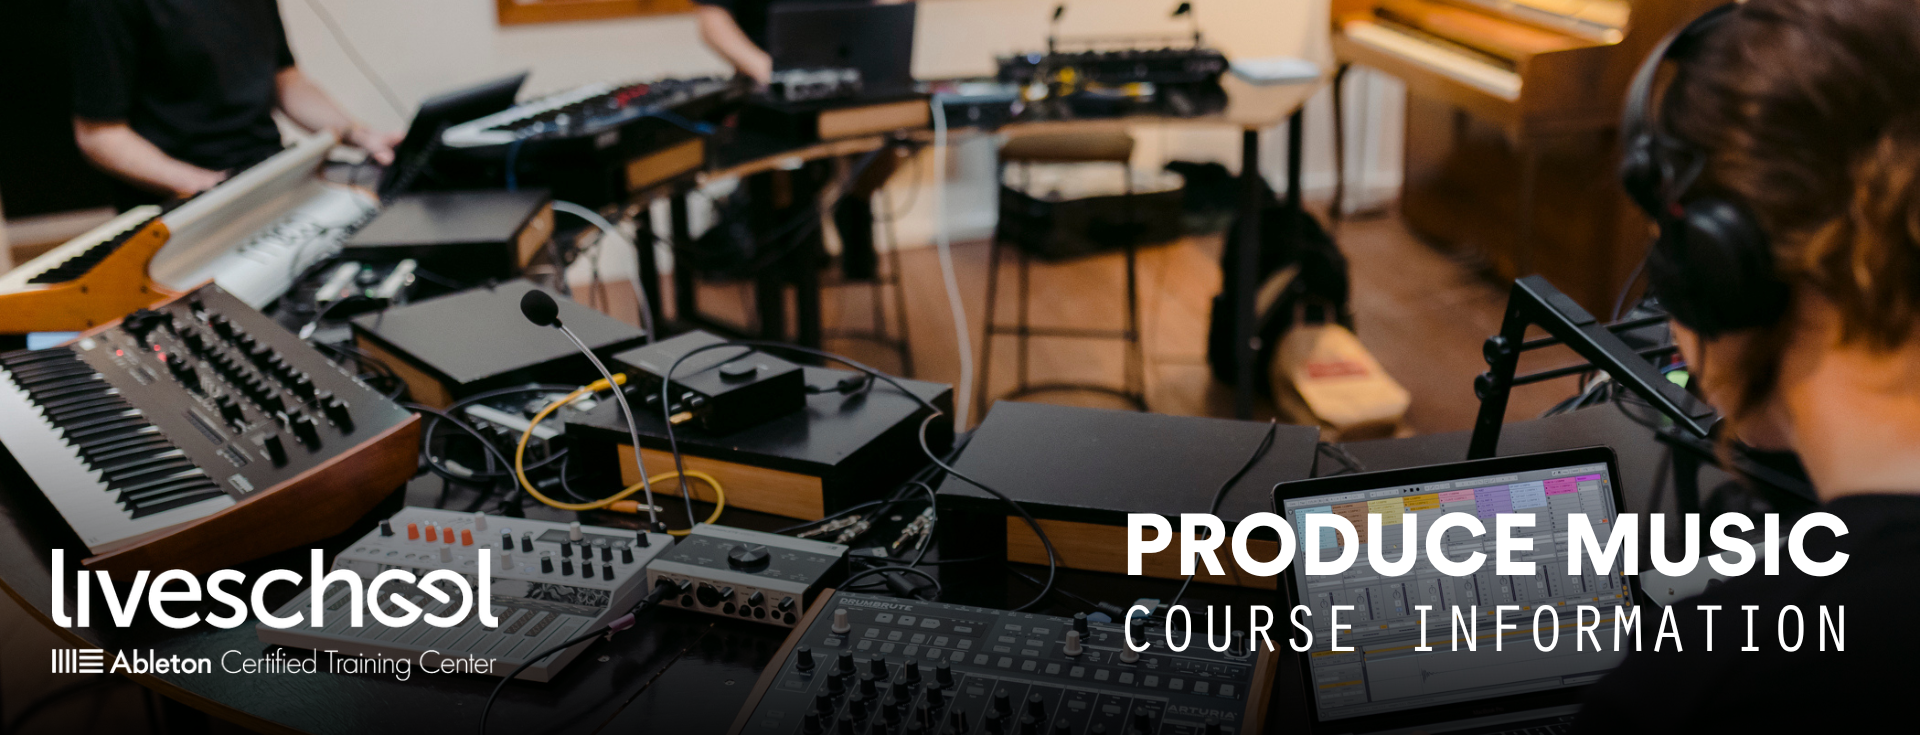 Liveschool | Produce Music Course